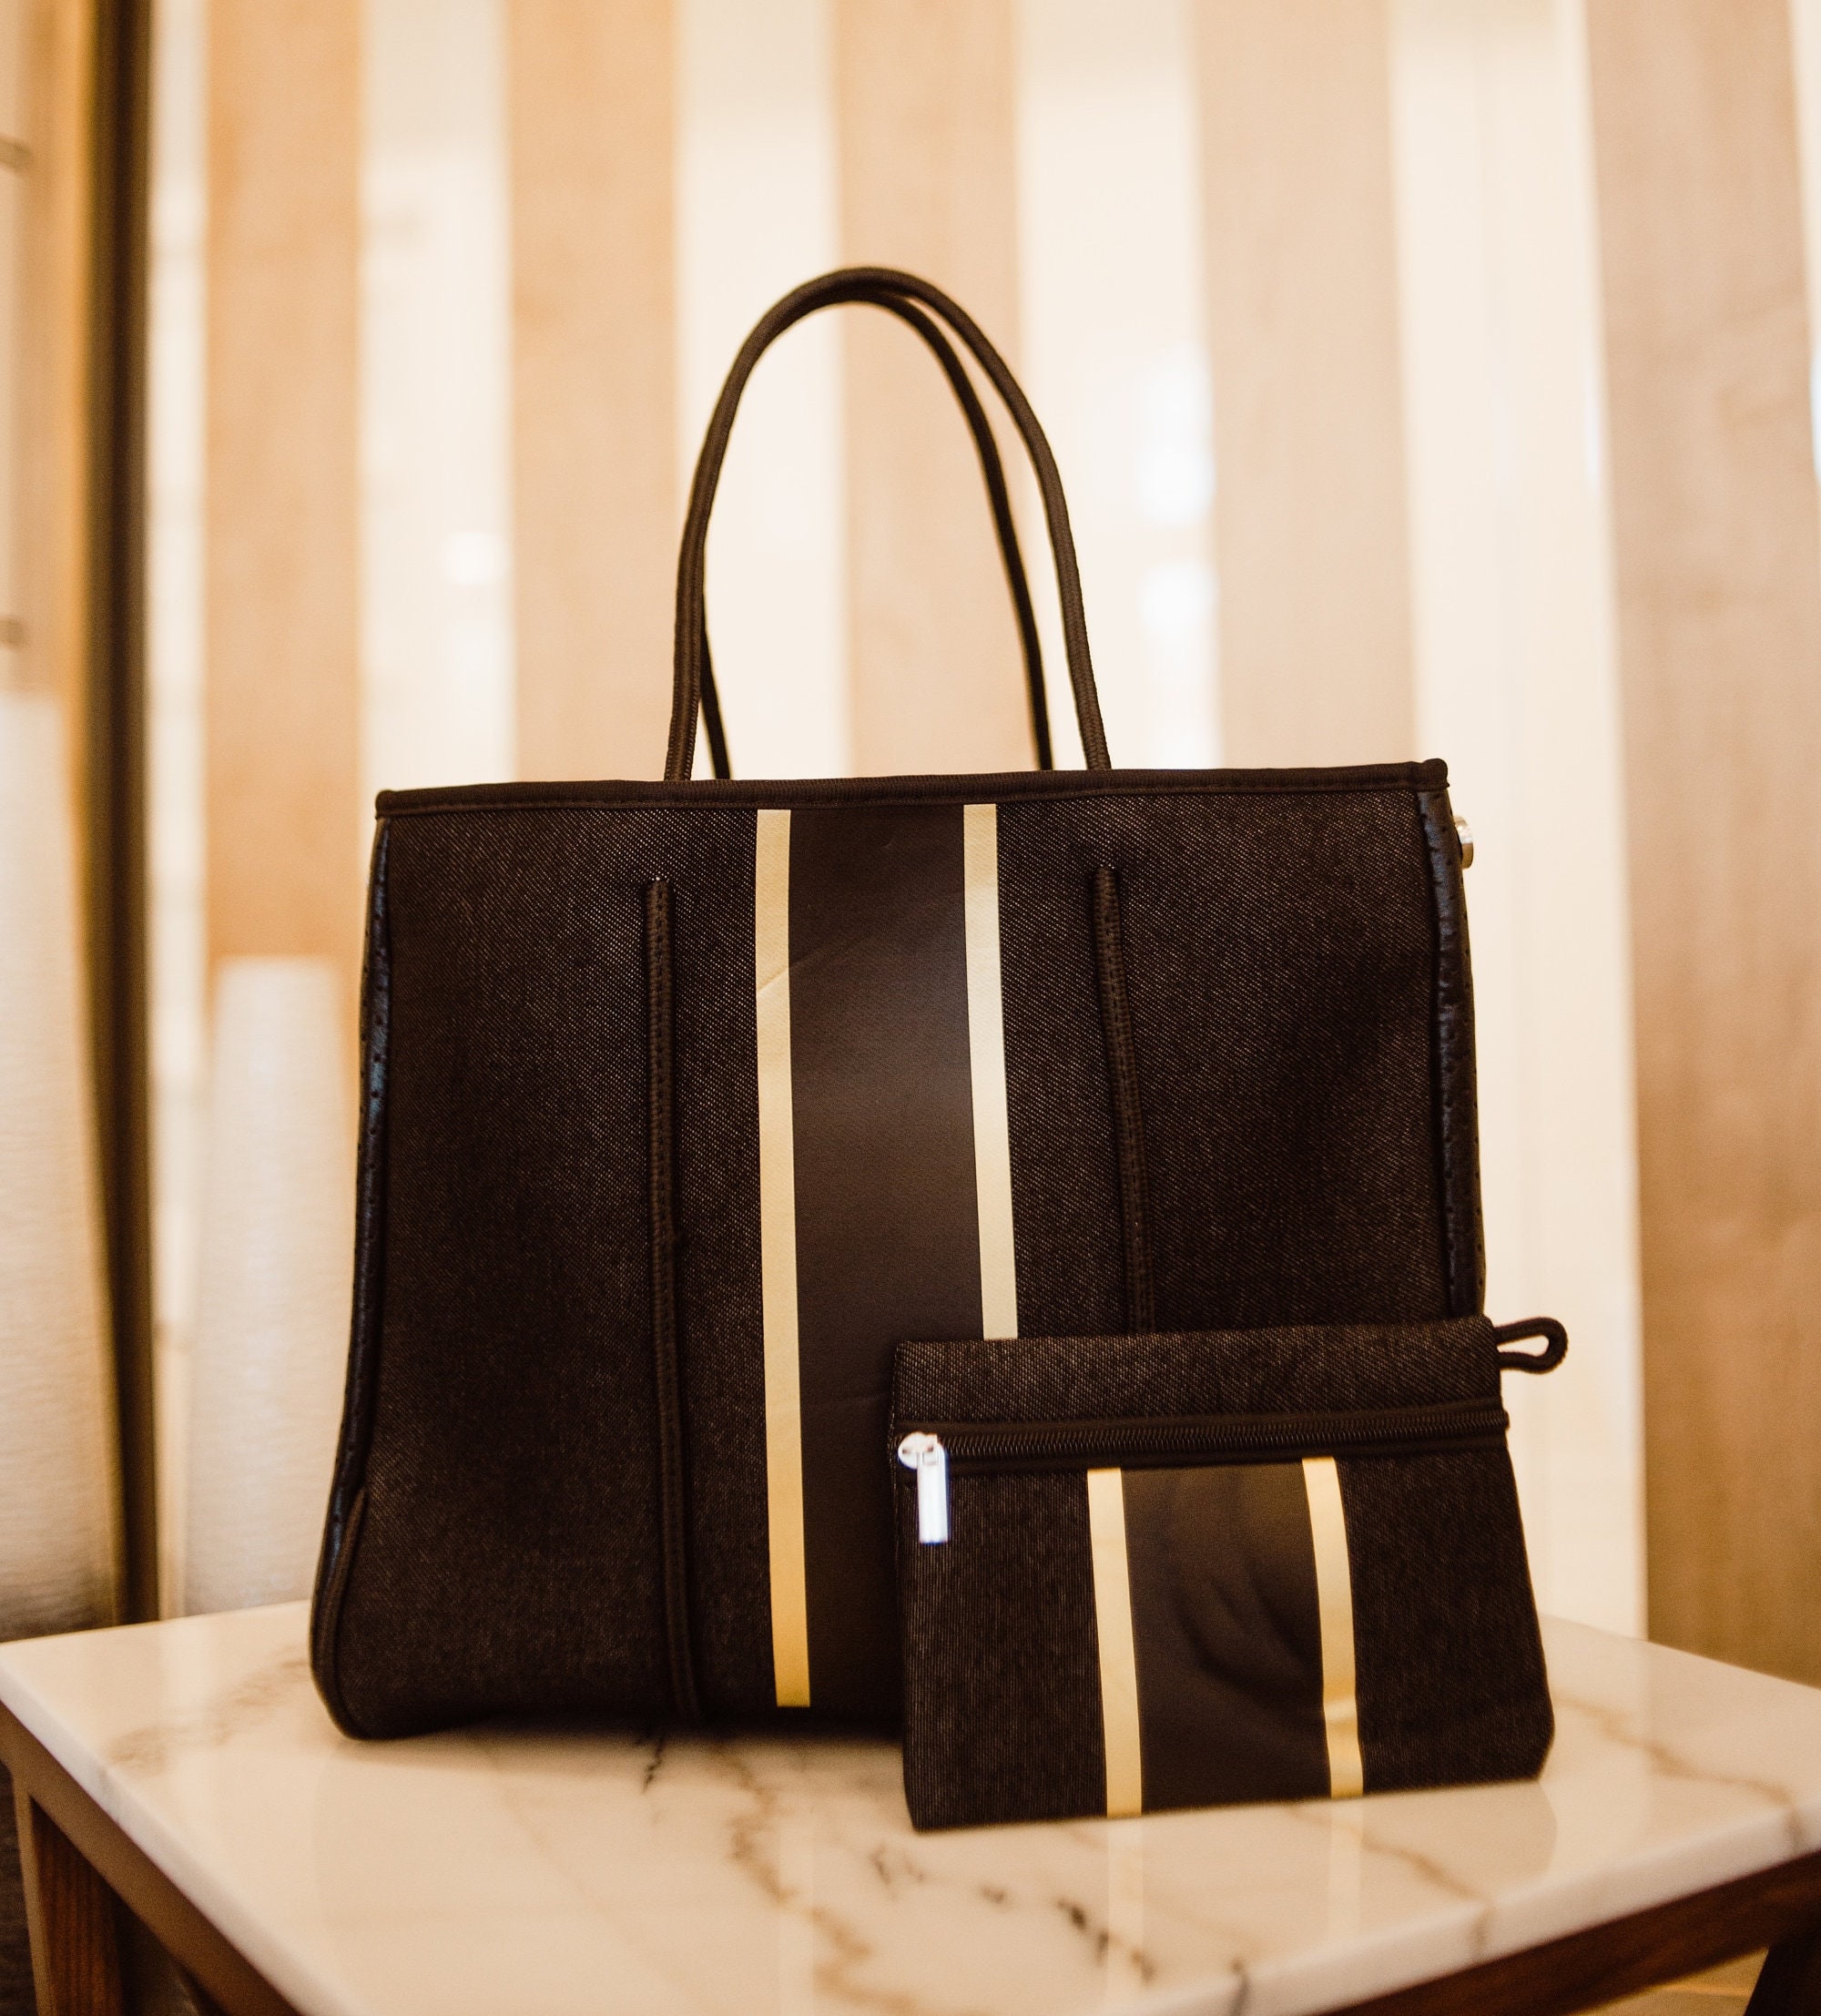 Neoprene Tote Bag With Black Design With Gold Stripe 